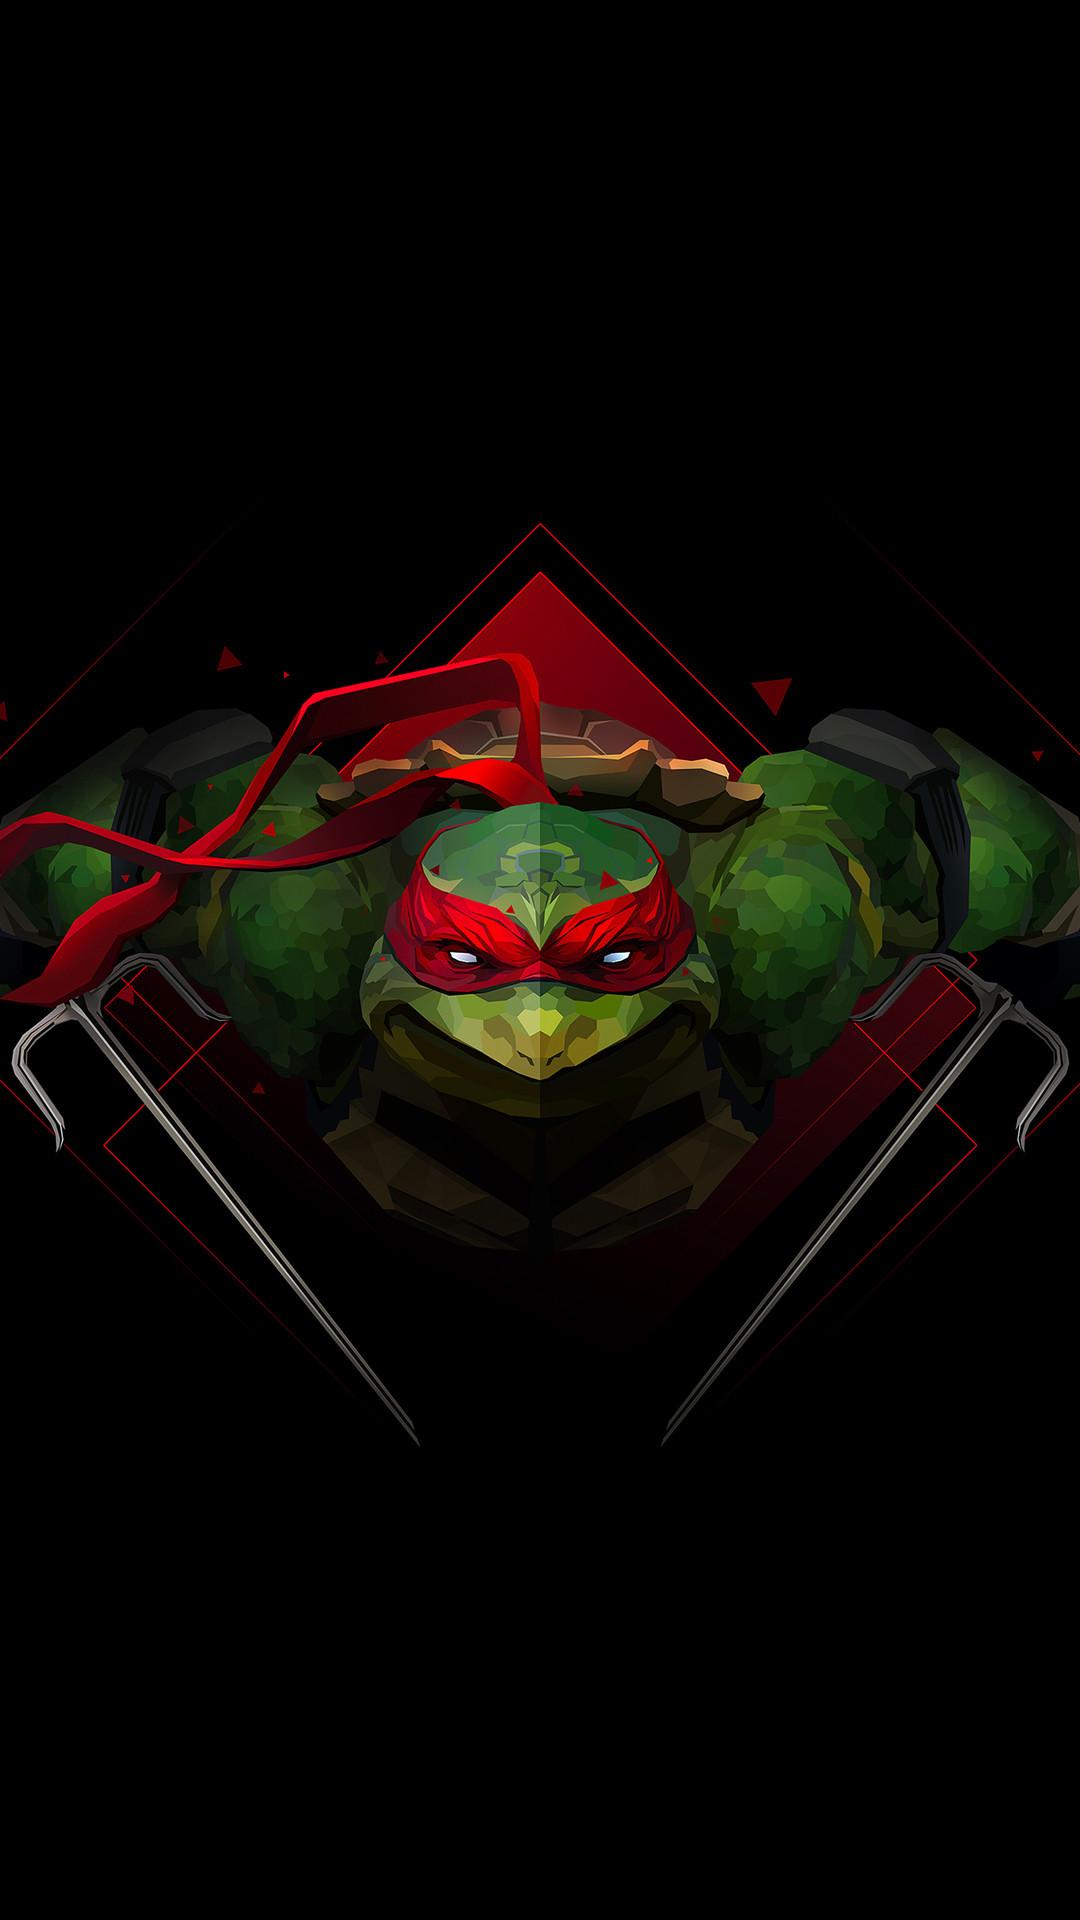 Ninja Turtle iPhone Wallpaper